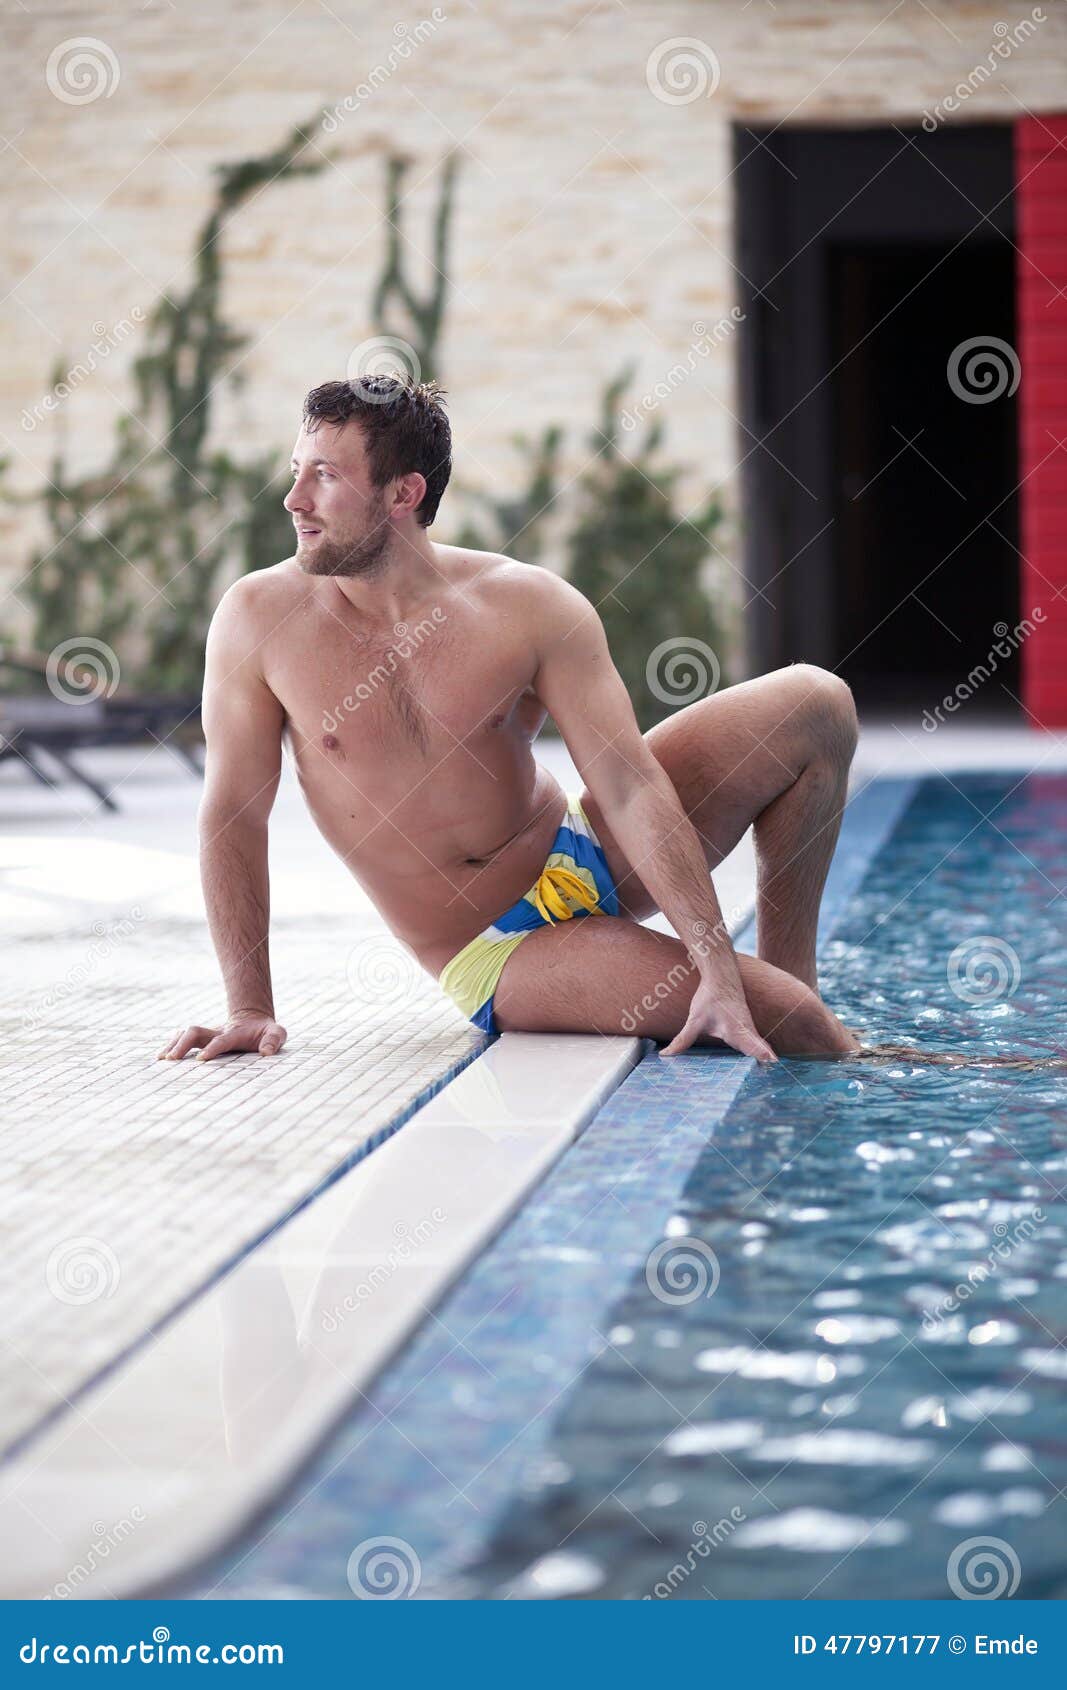 Login #swimsuit #photoshoot #poses #pool #swimsuitphotoshootposespool Girl  in Mexico - Tropical swim suit phot… | Photoshoot poses, Swimsuits  photoshoot, Photoshoot